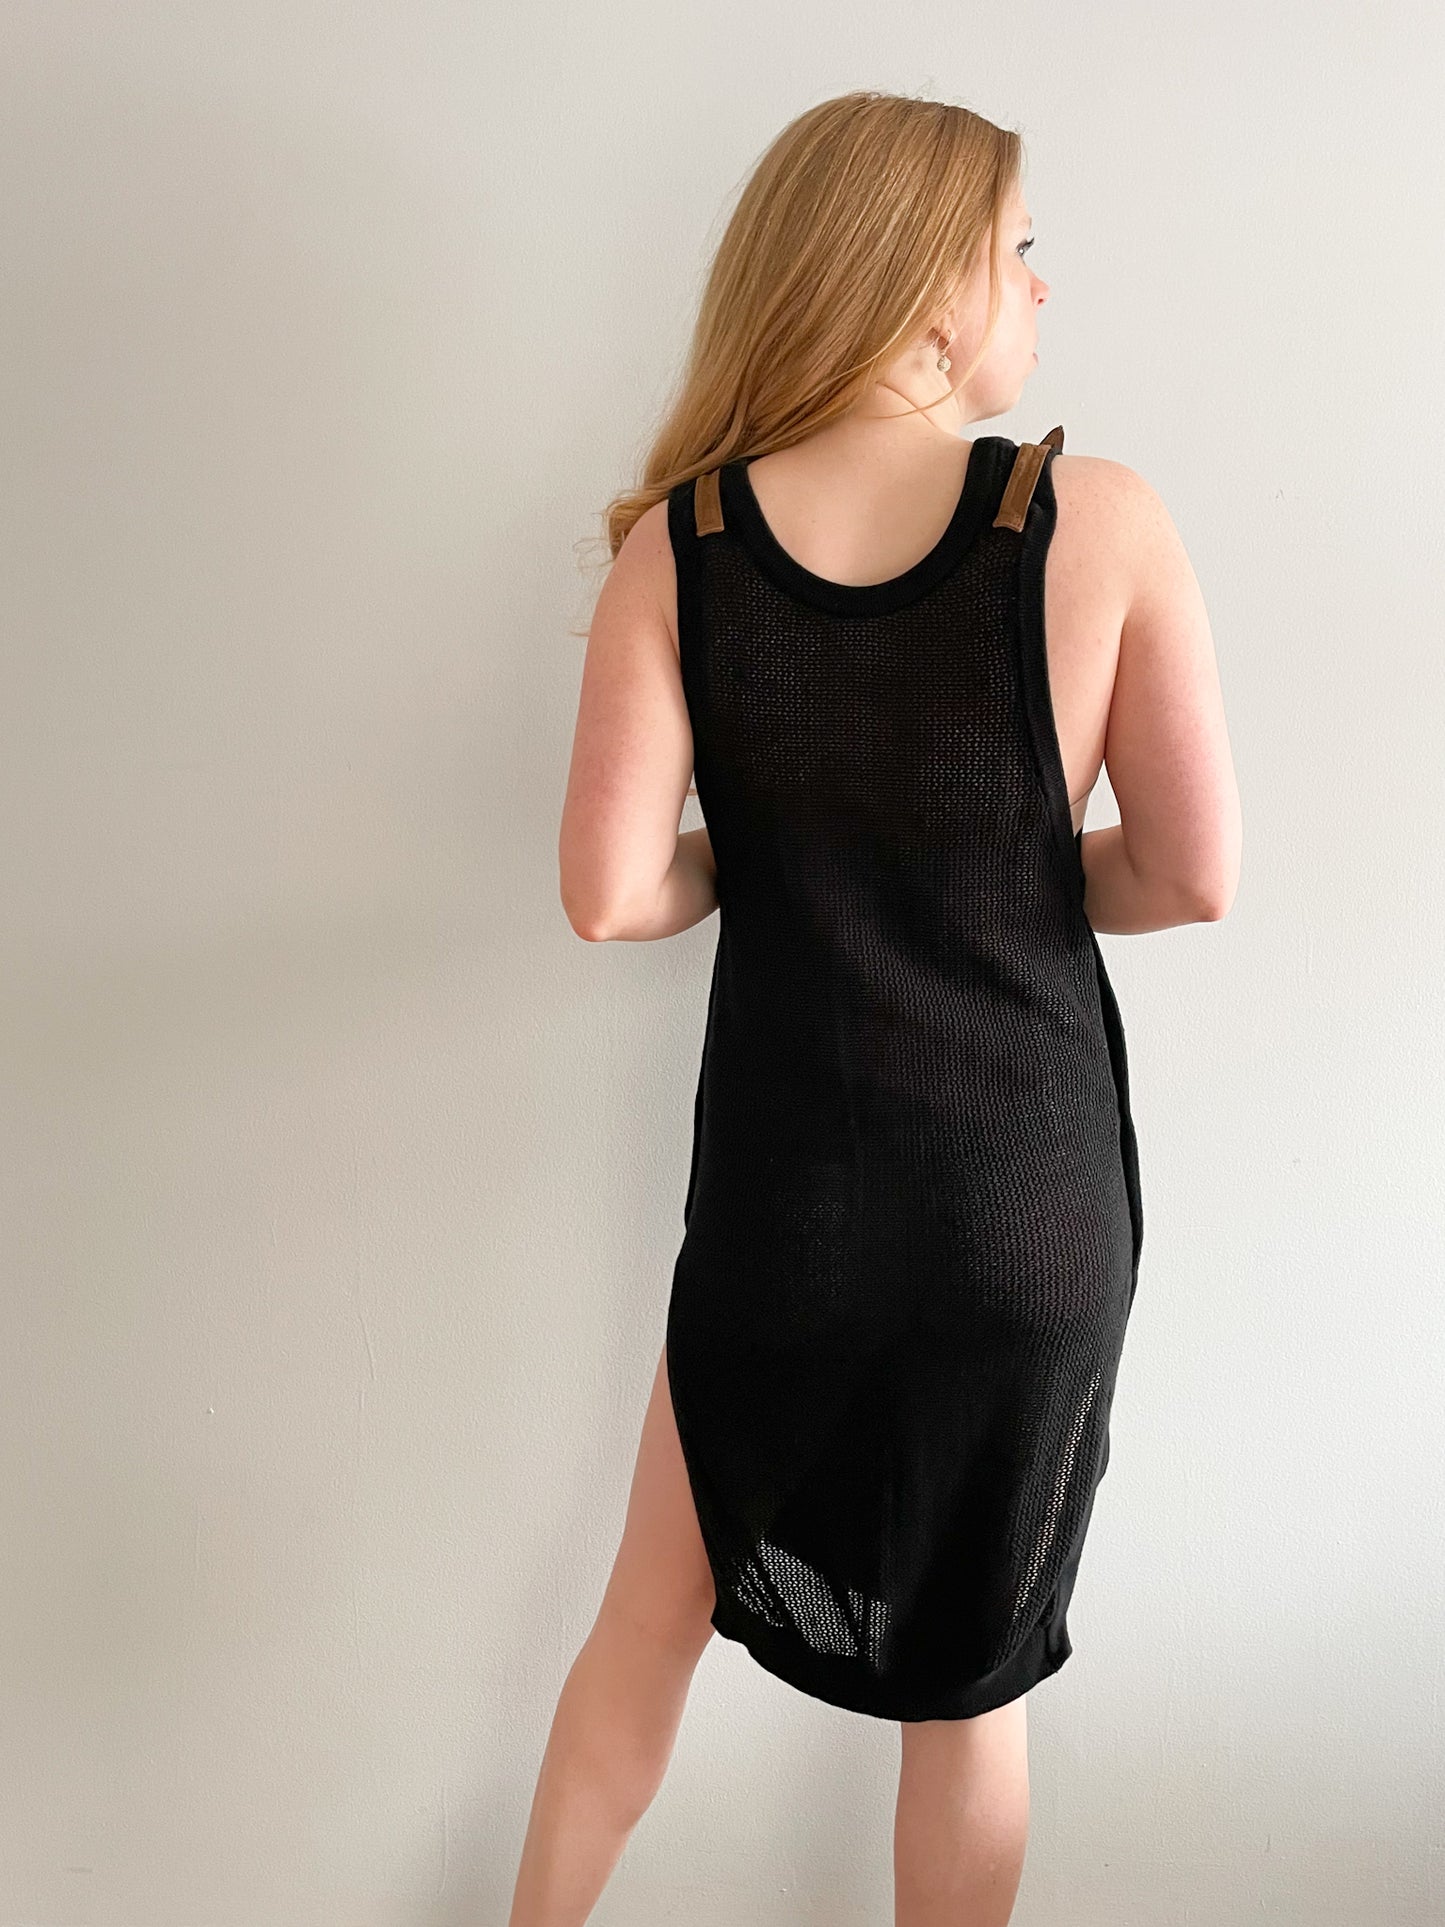 Black Cotton Knit Sleeveless Slit Dress - S/M